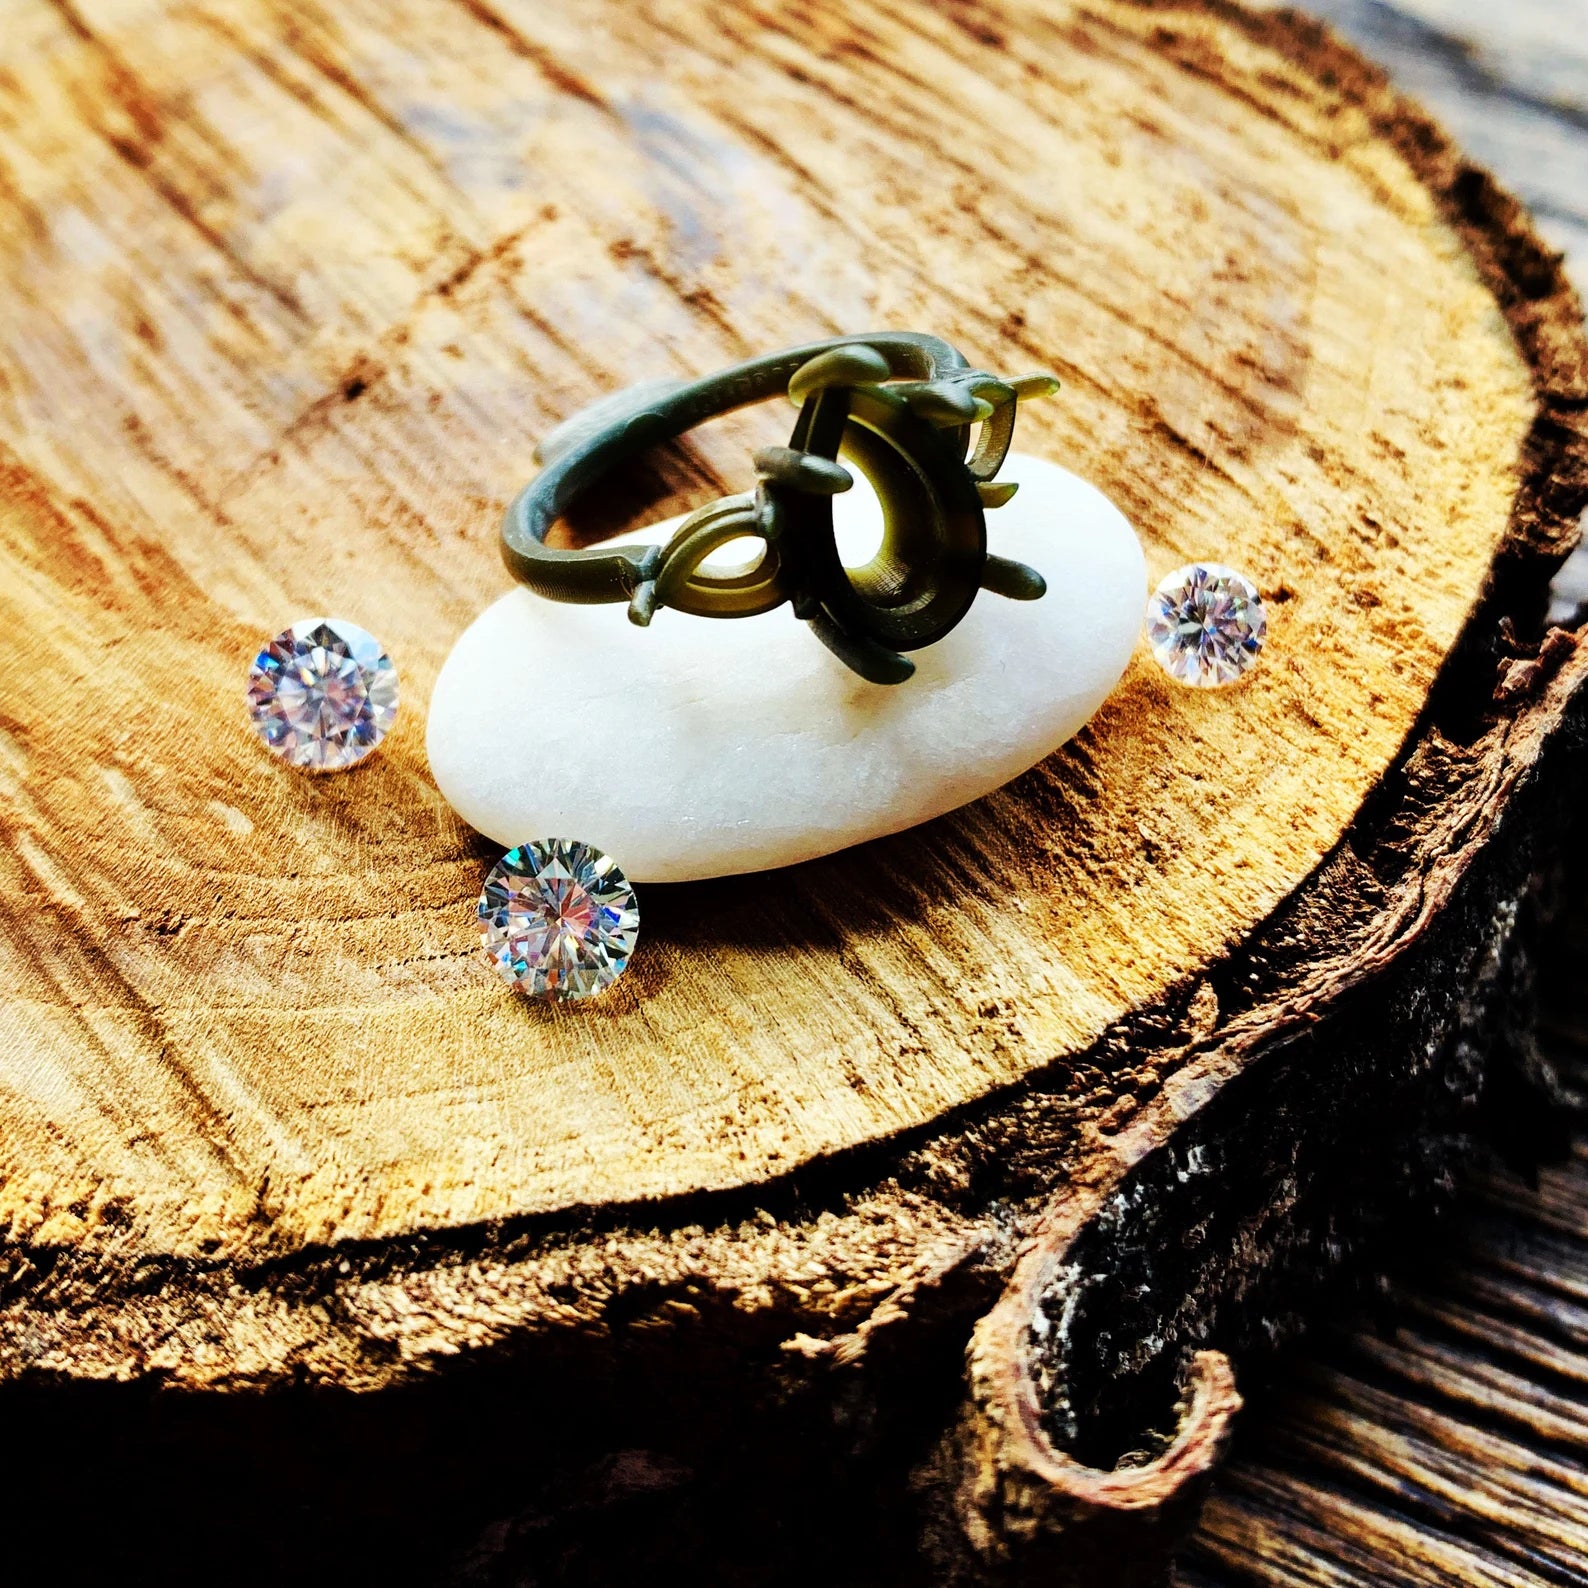 andrea ring - 3 carat asscher cut ZAYA moissanite, three stone alexandrite ring - J Hollywood Designs